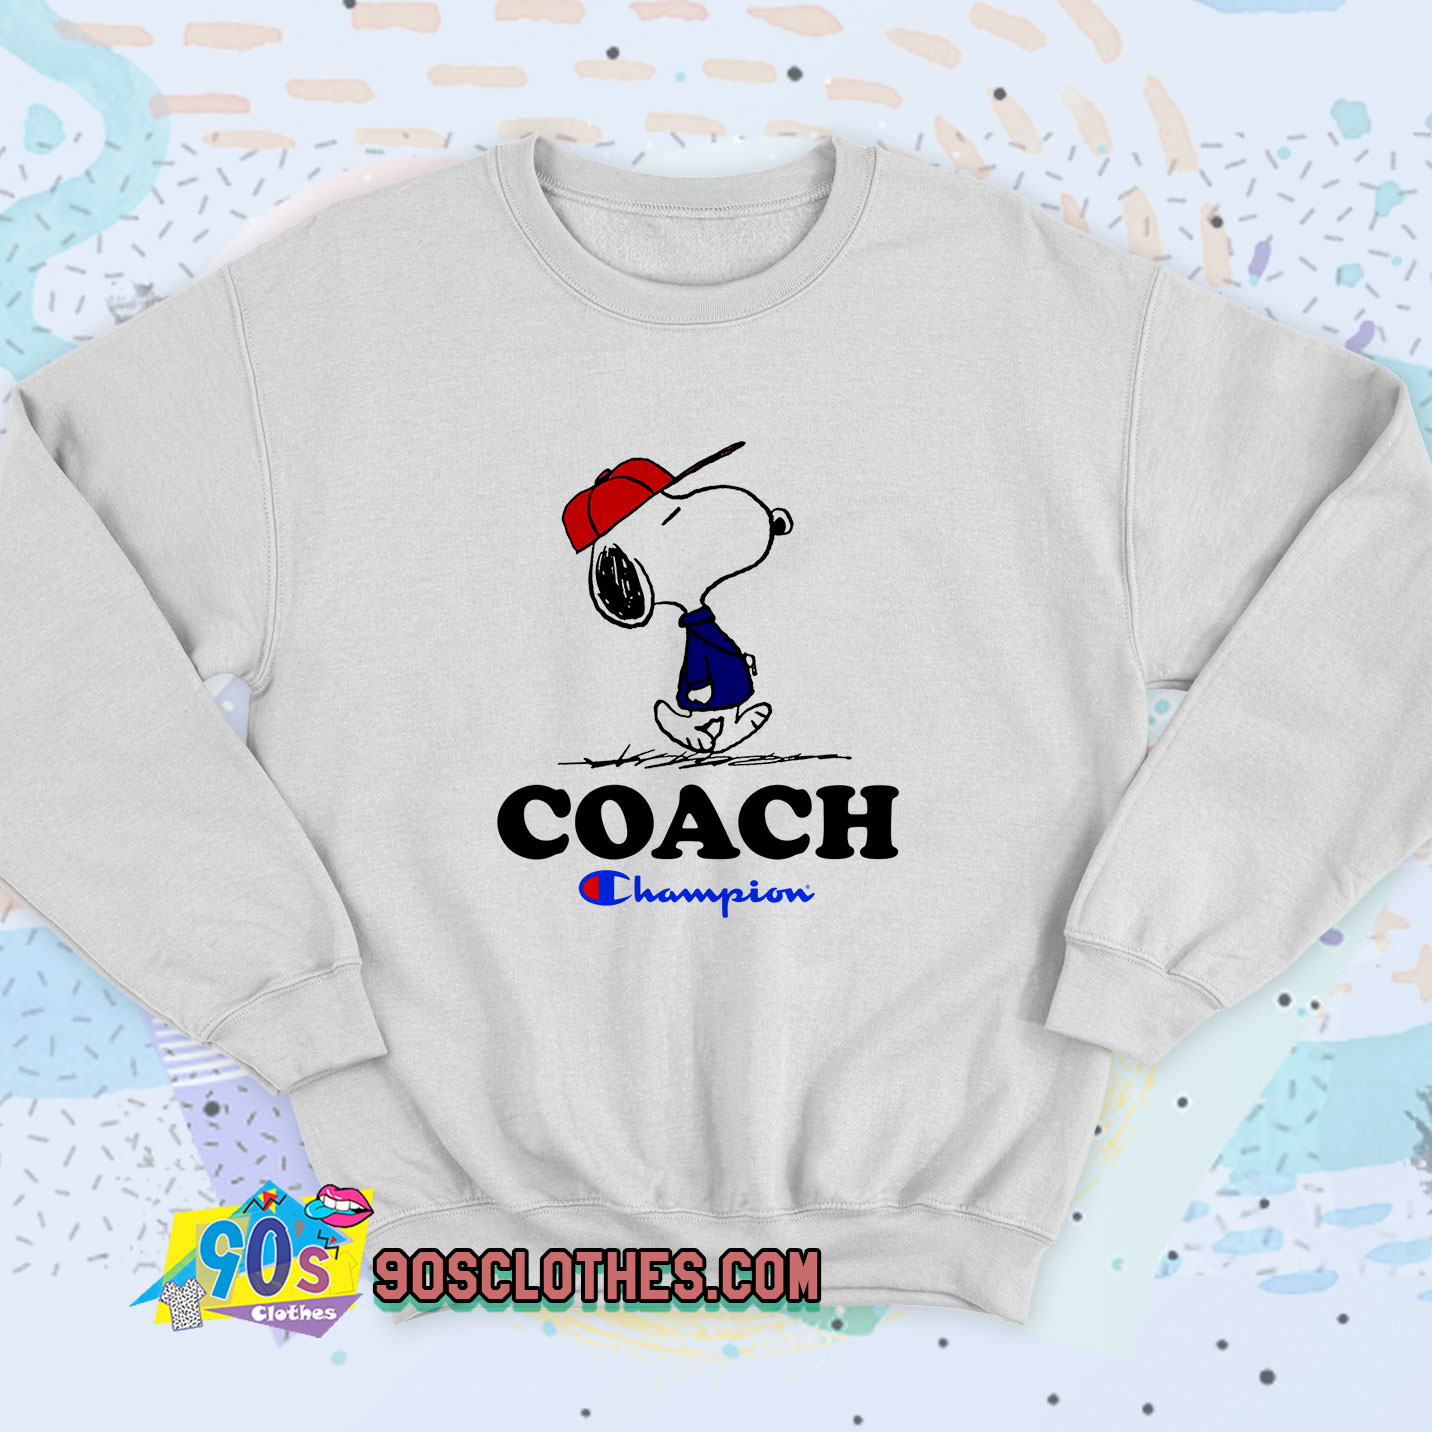 Peanuts Snoopy Coach Champion Sweatshirt Style - 90sclothes.com